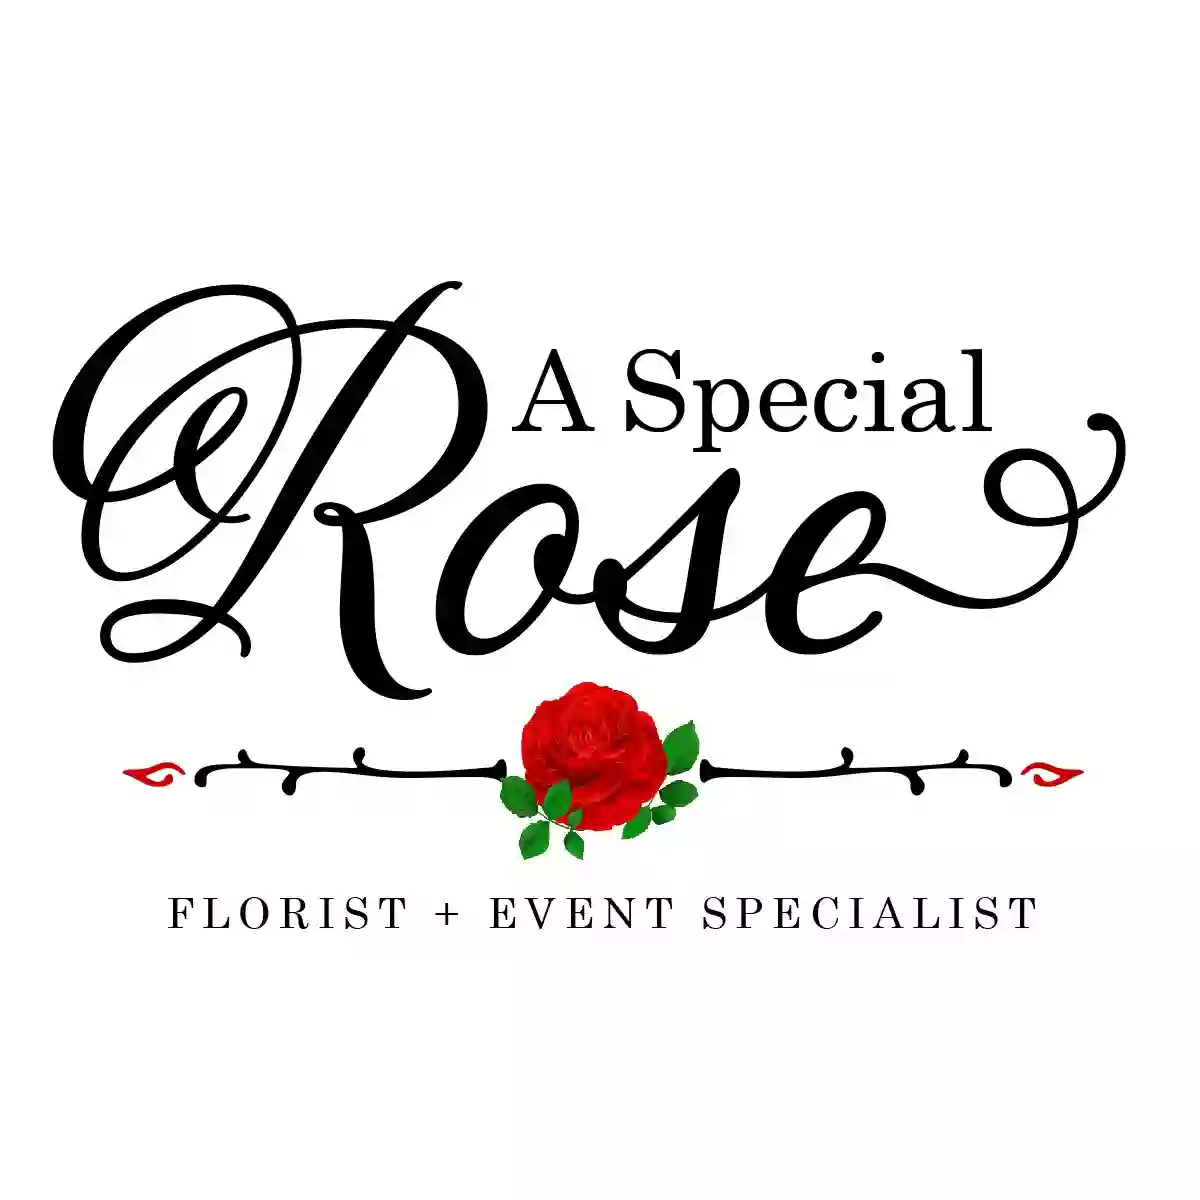 A Special Rose Florist